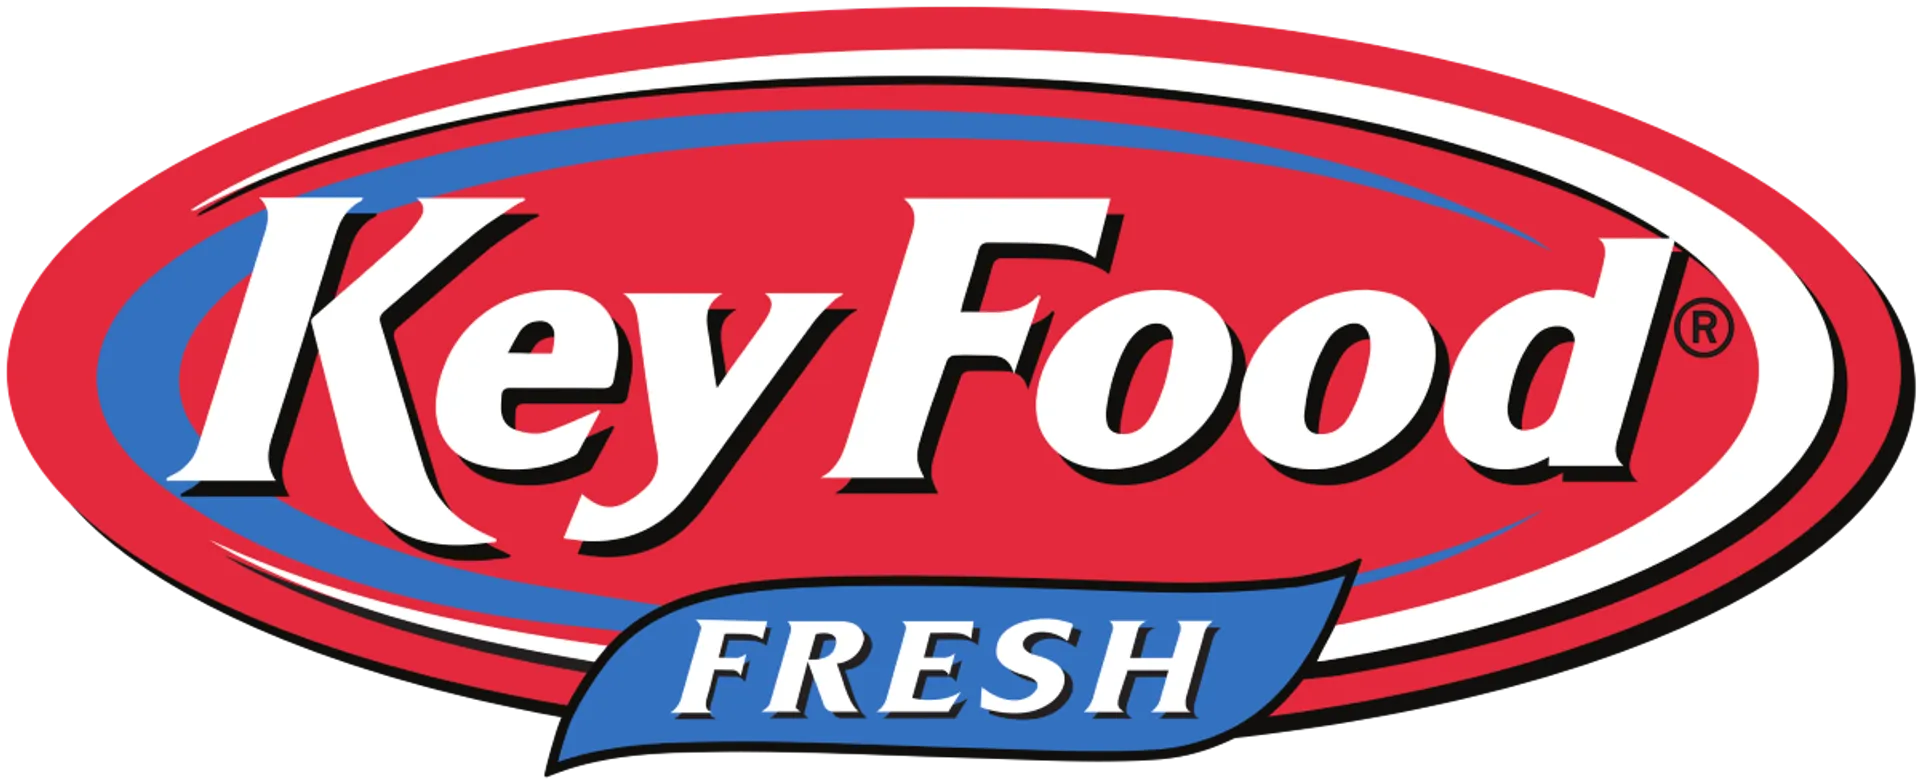 KEY FOOD logo current weekly ad